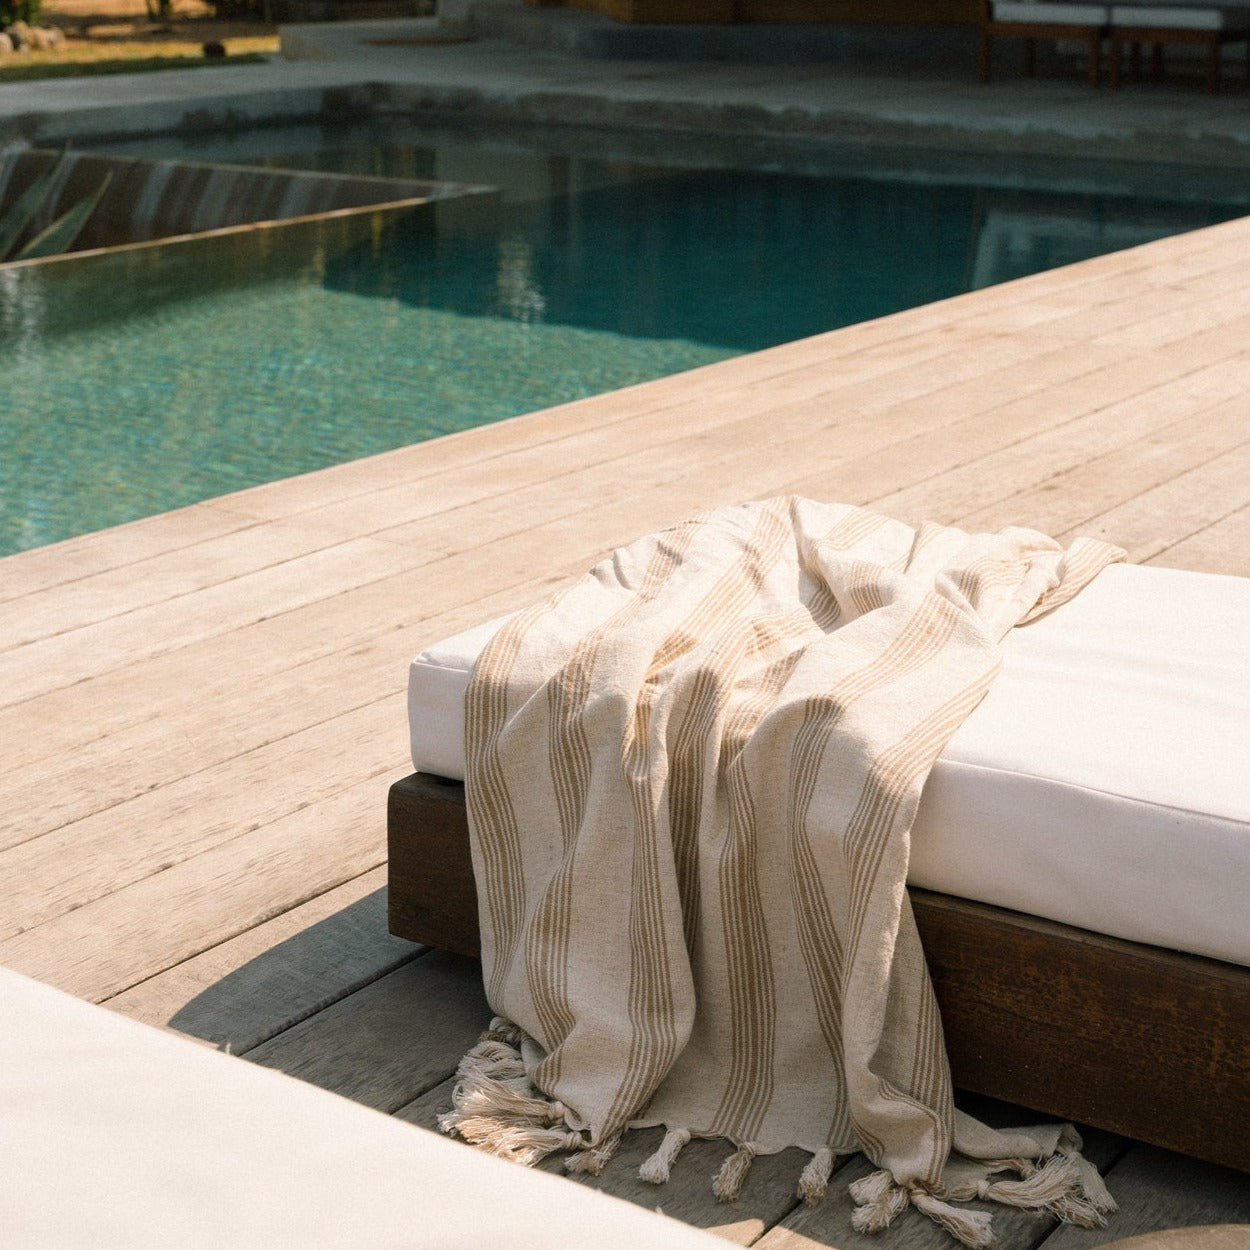 Sade Turkish towel by the pool.